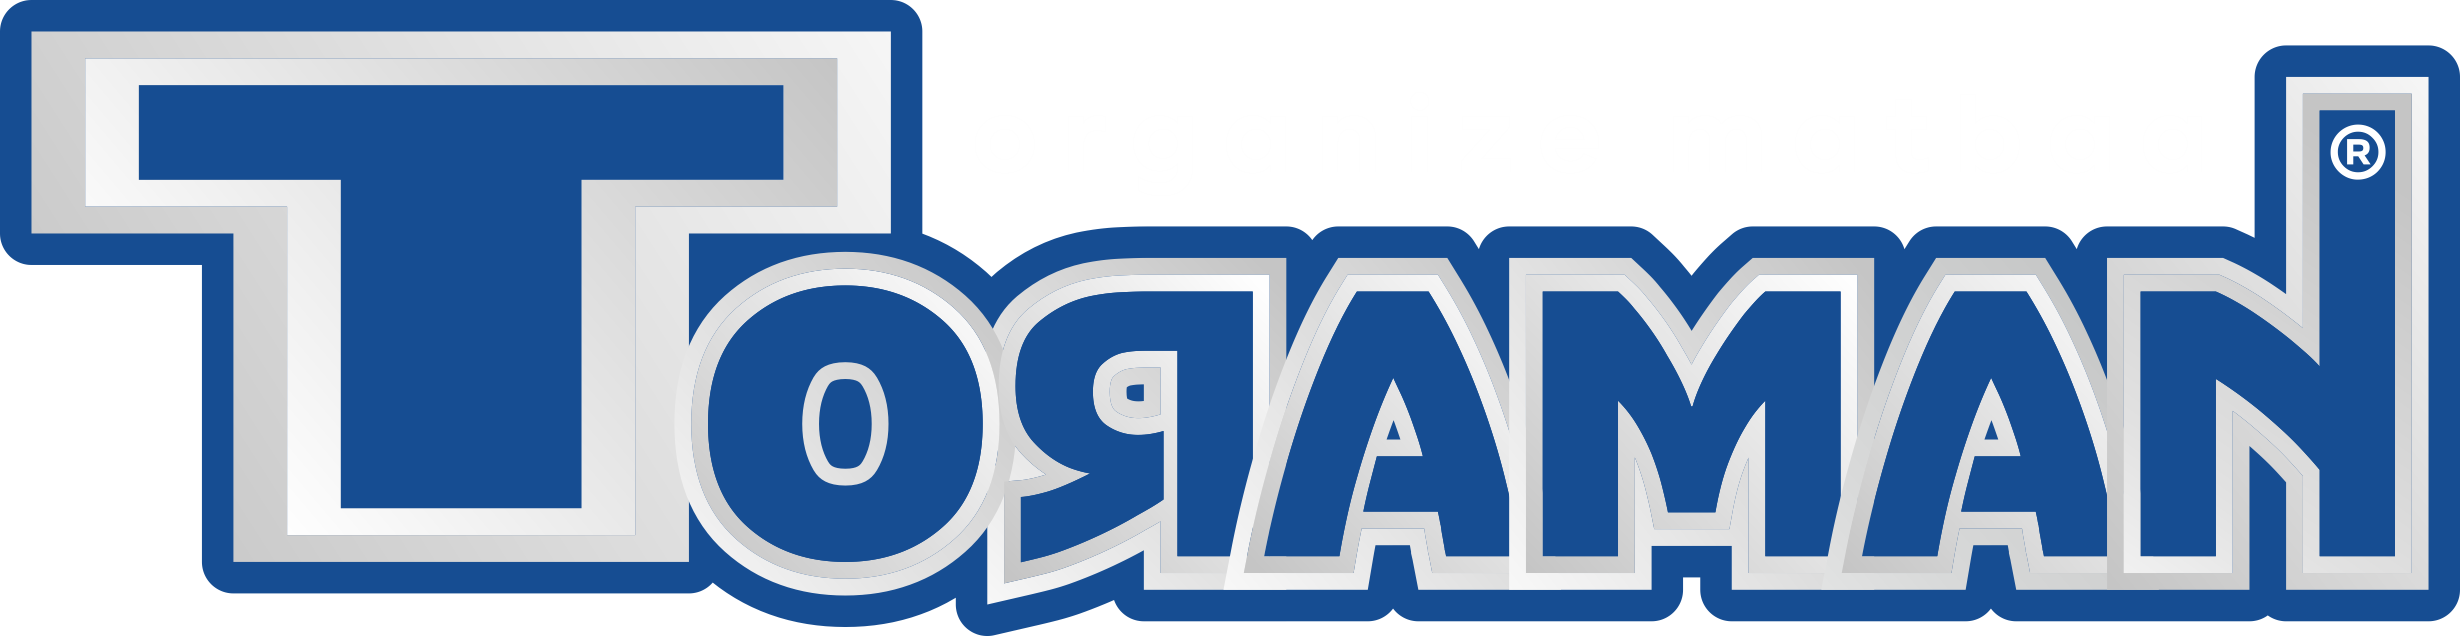 Organize Toraman Matbaa